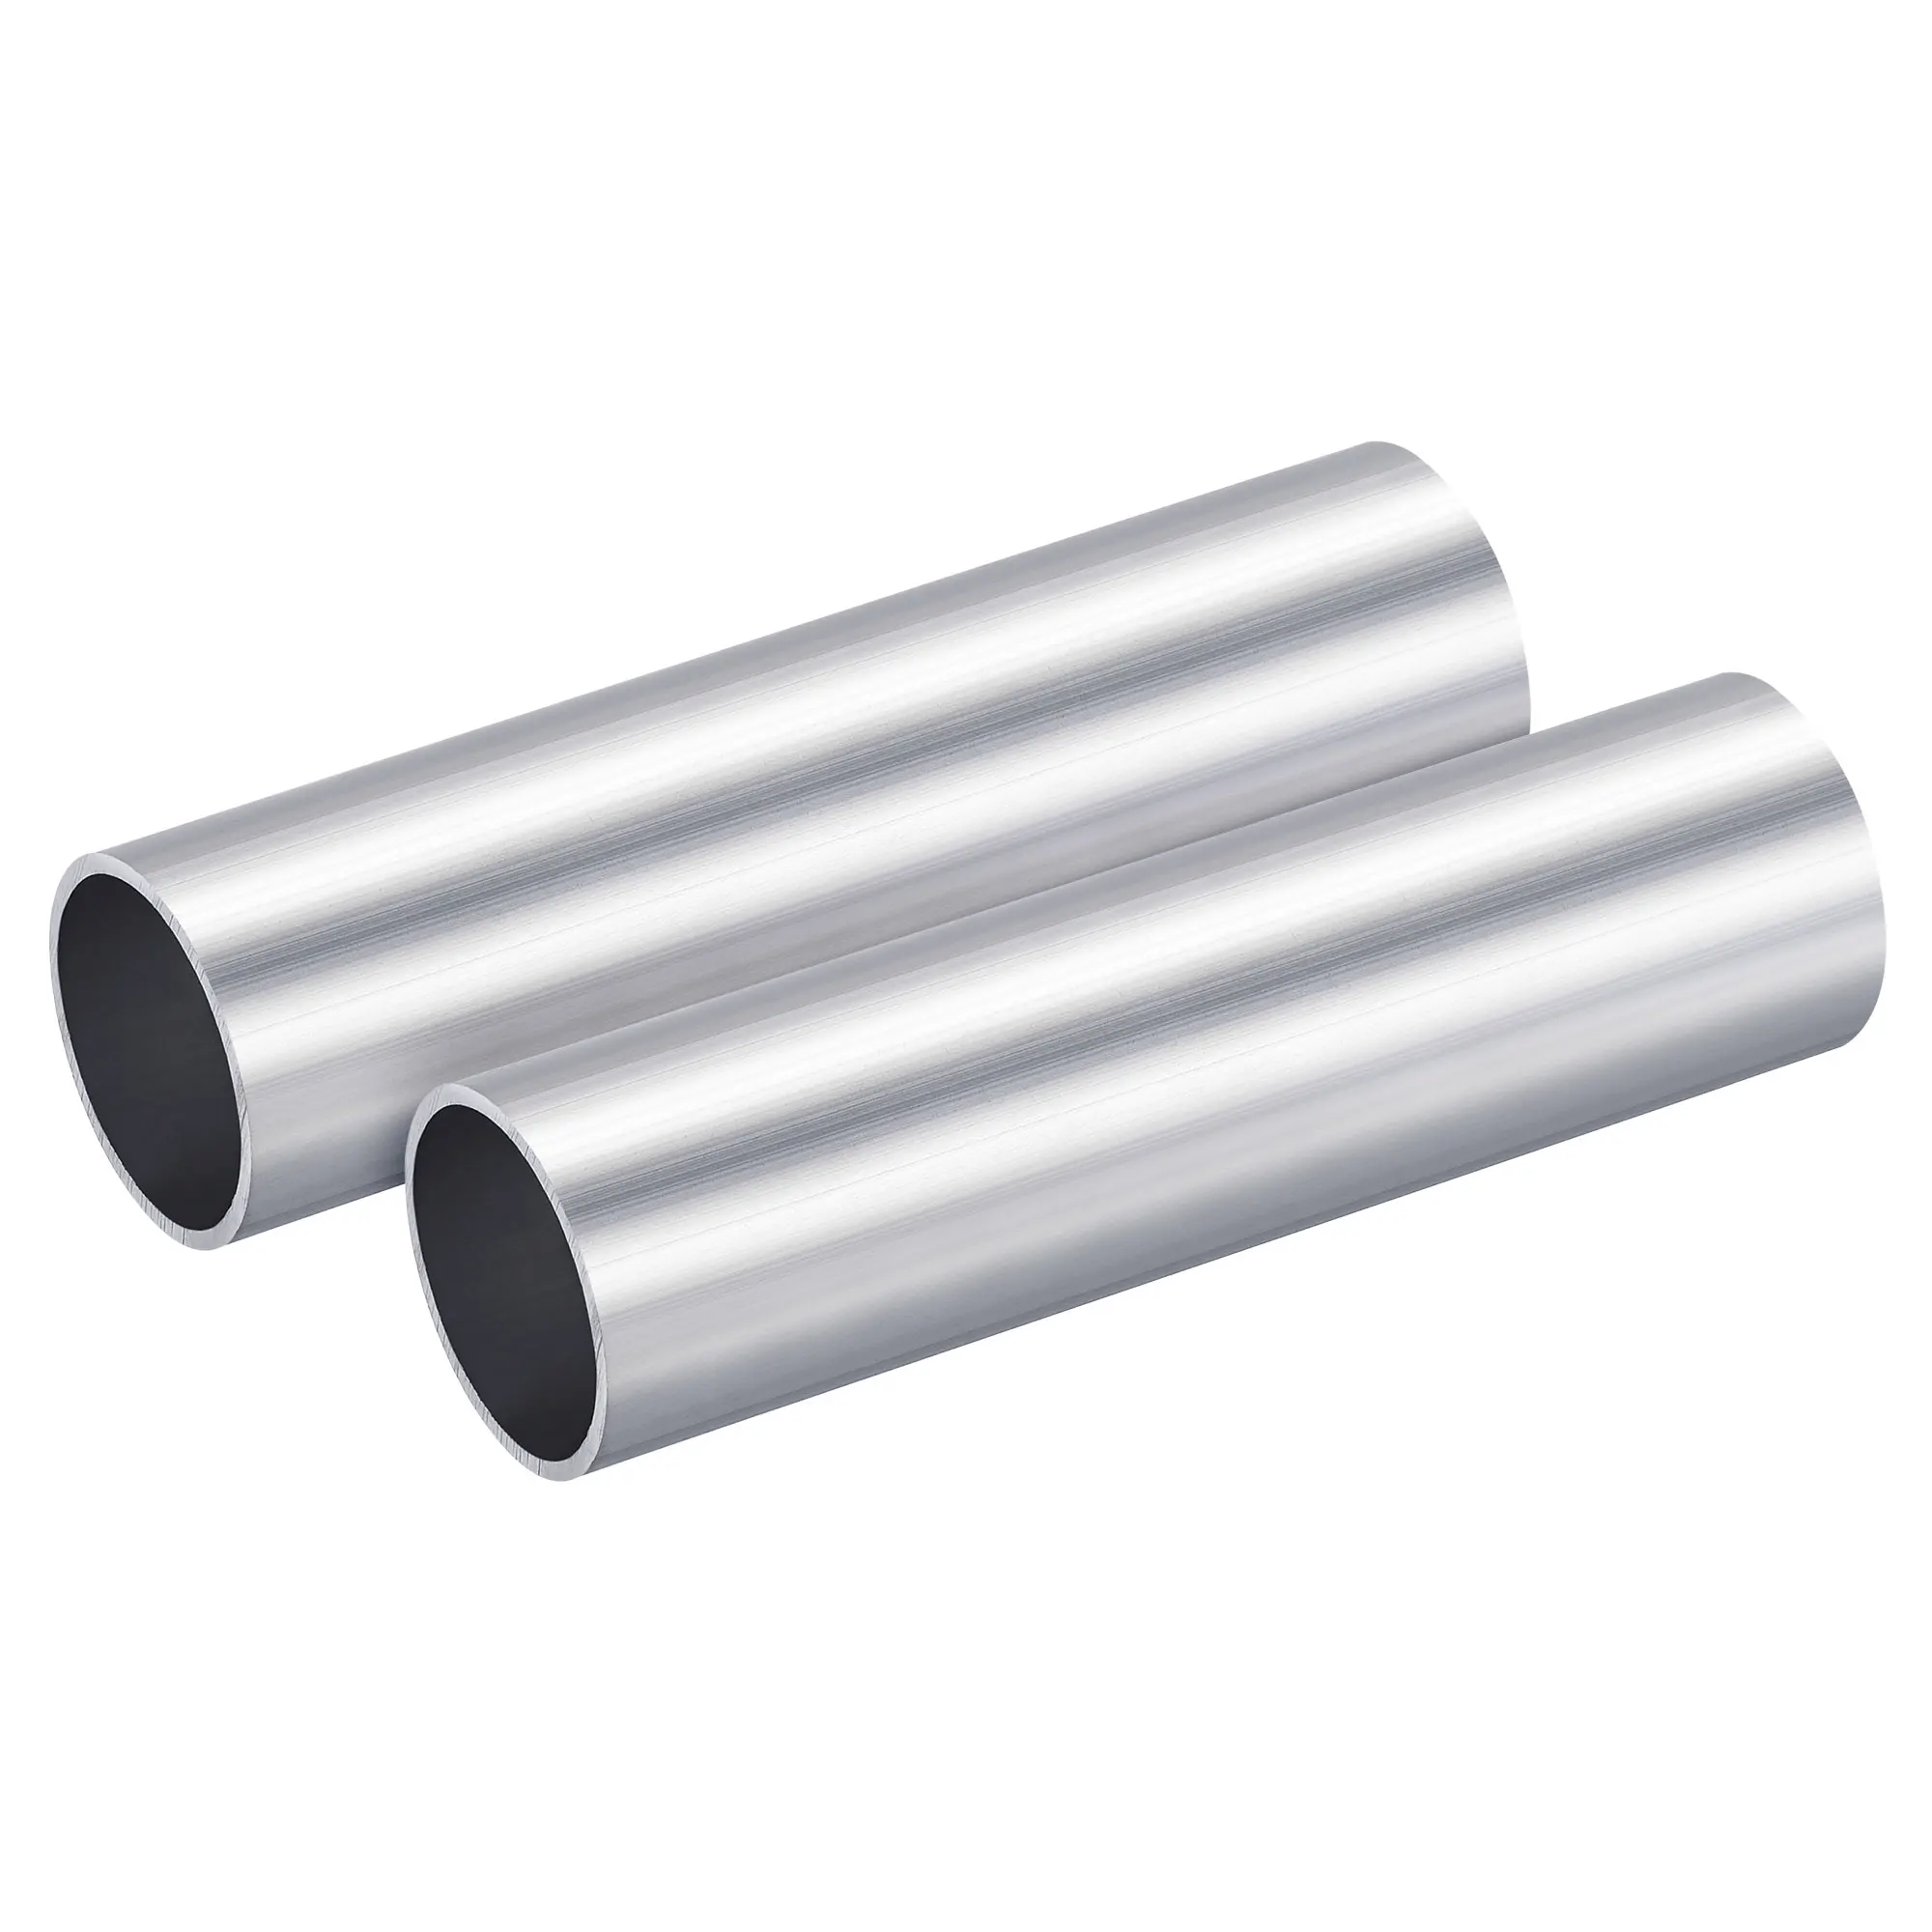 Aluminium Round Tube Pipe Various Sizes 25mm 30mm 40mm 50mm 60mm 80mm 100mm .... 